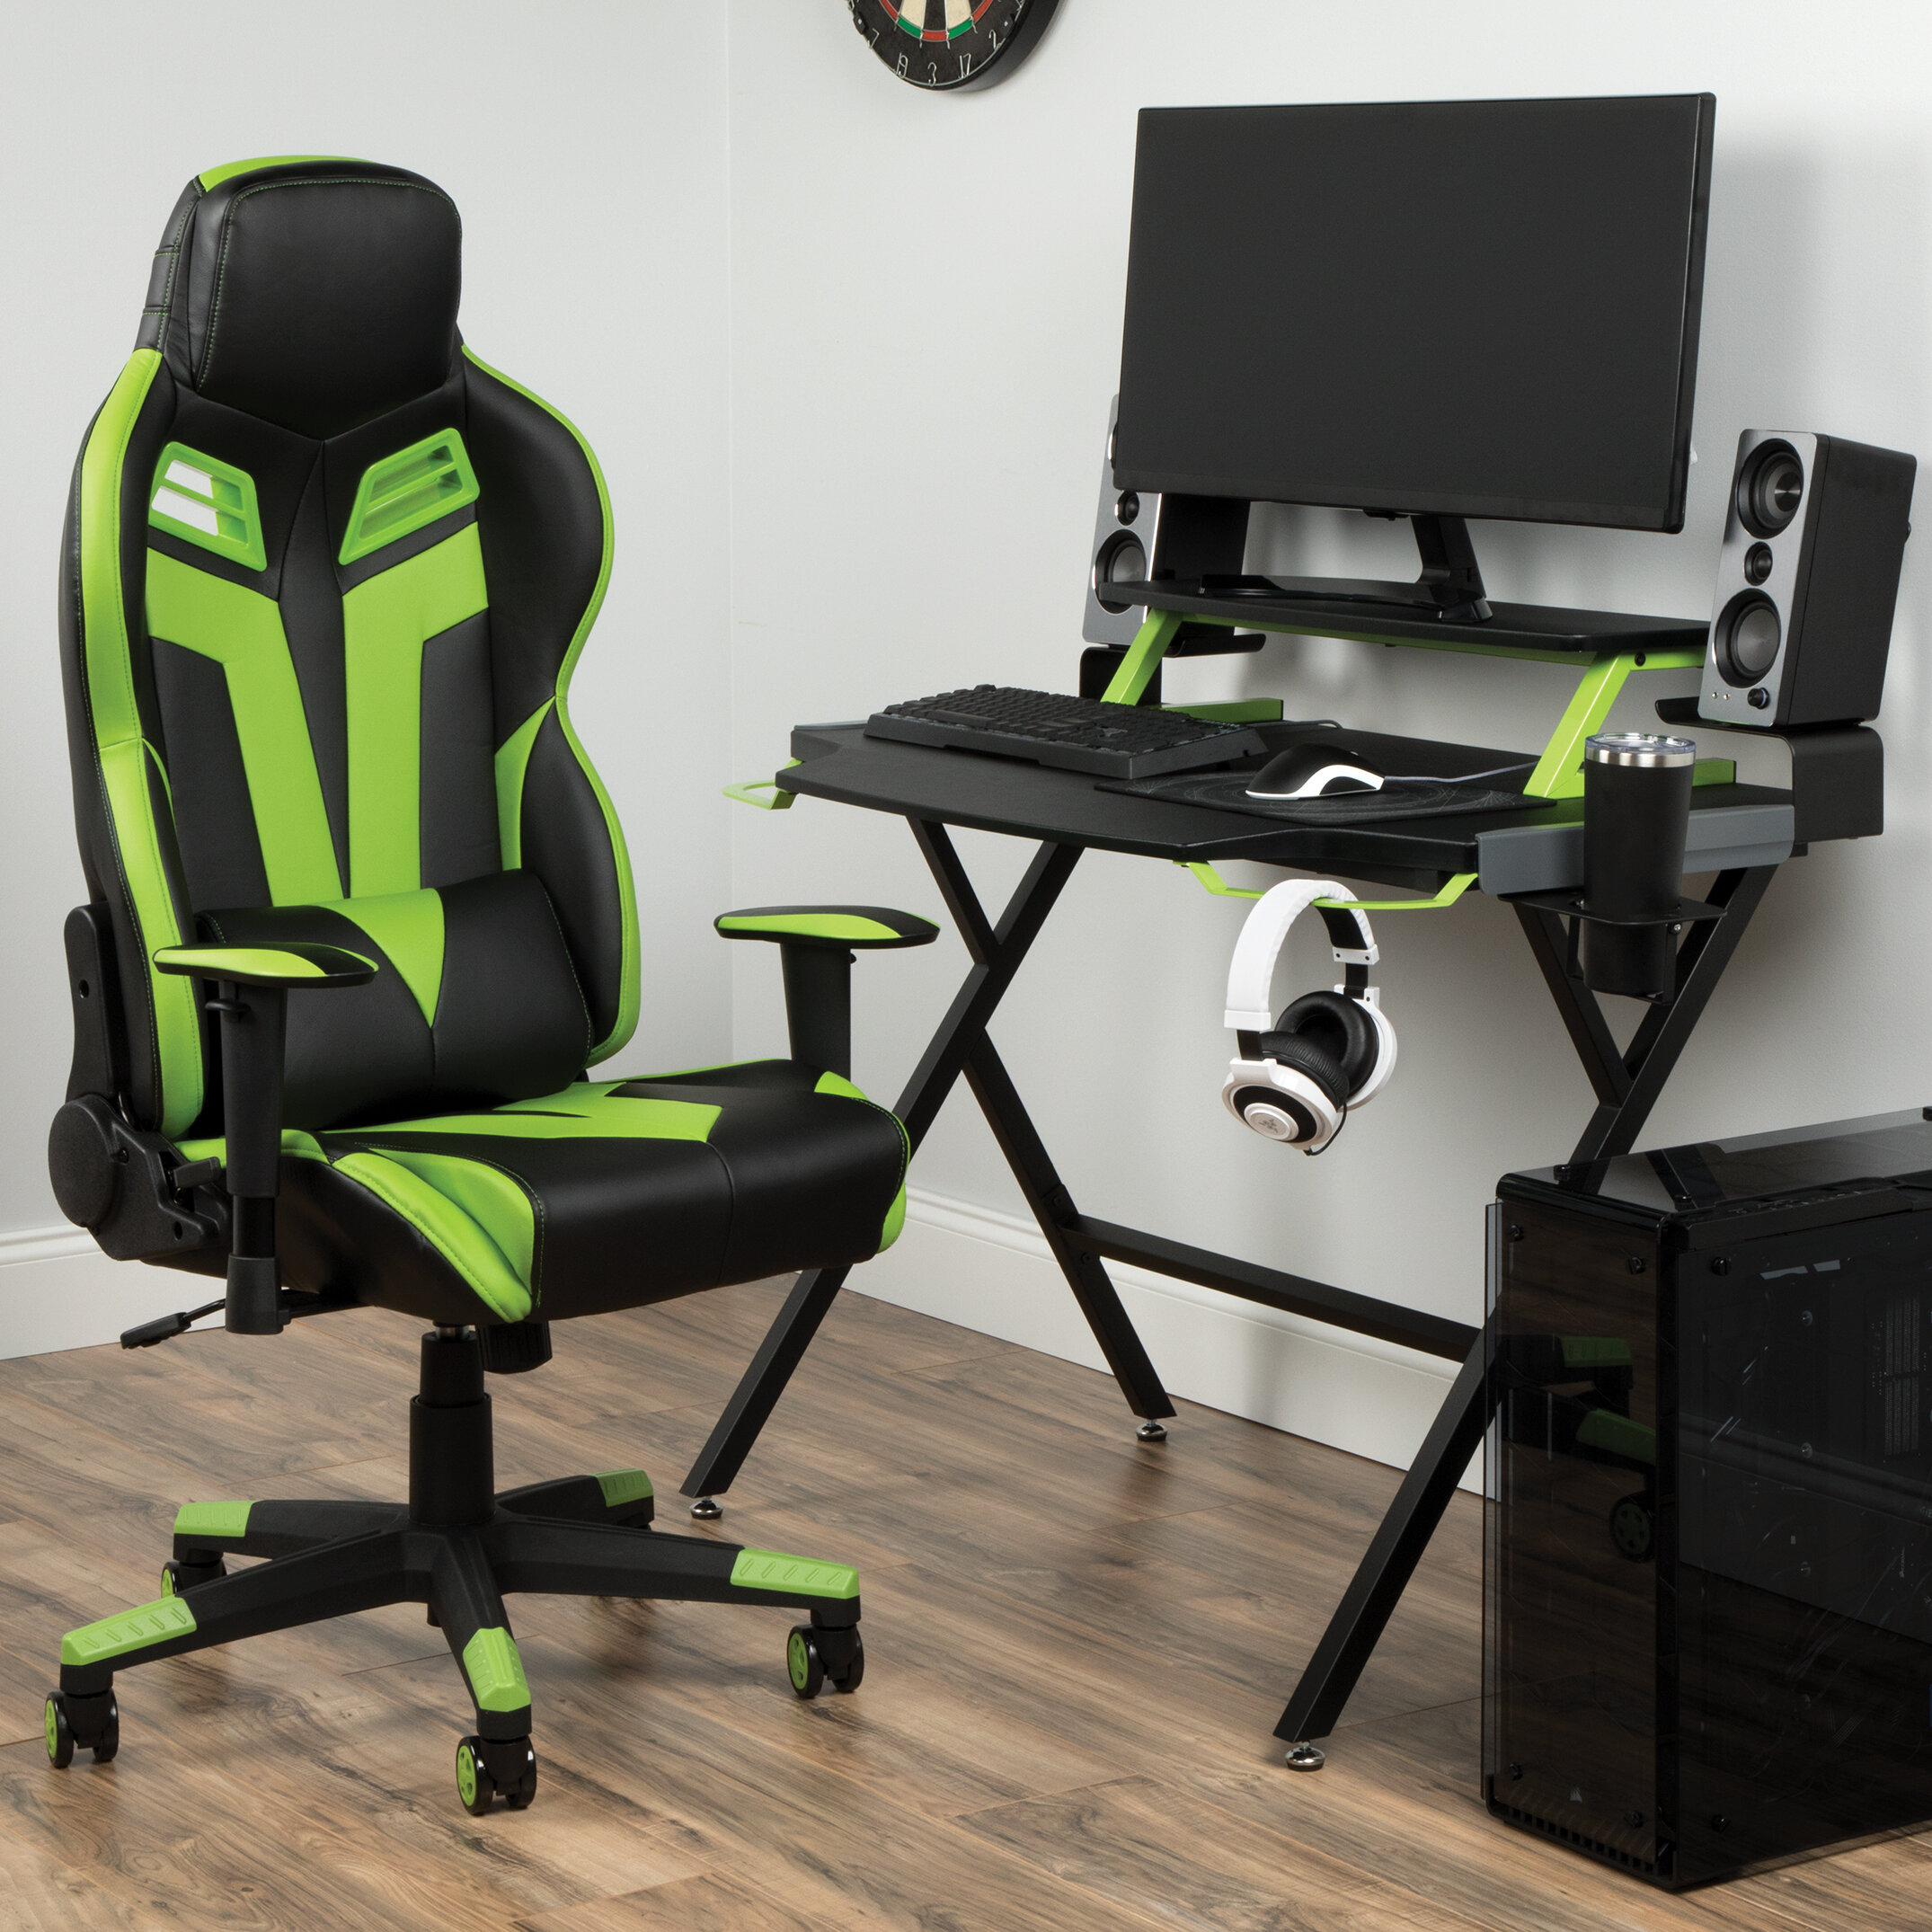 Respawn Gaming Desk And Chair Set Reviews Wayfair